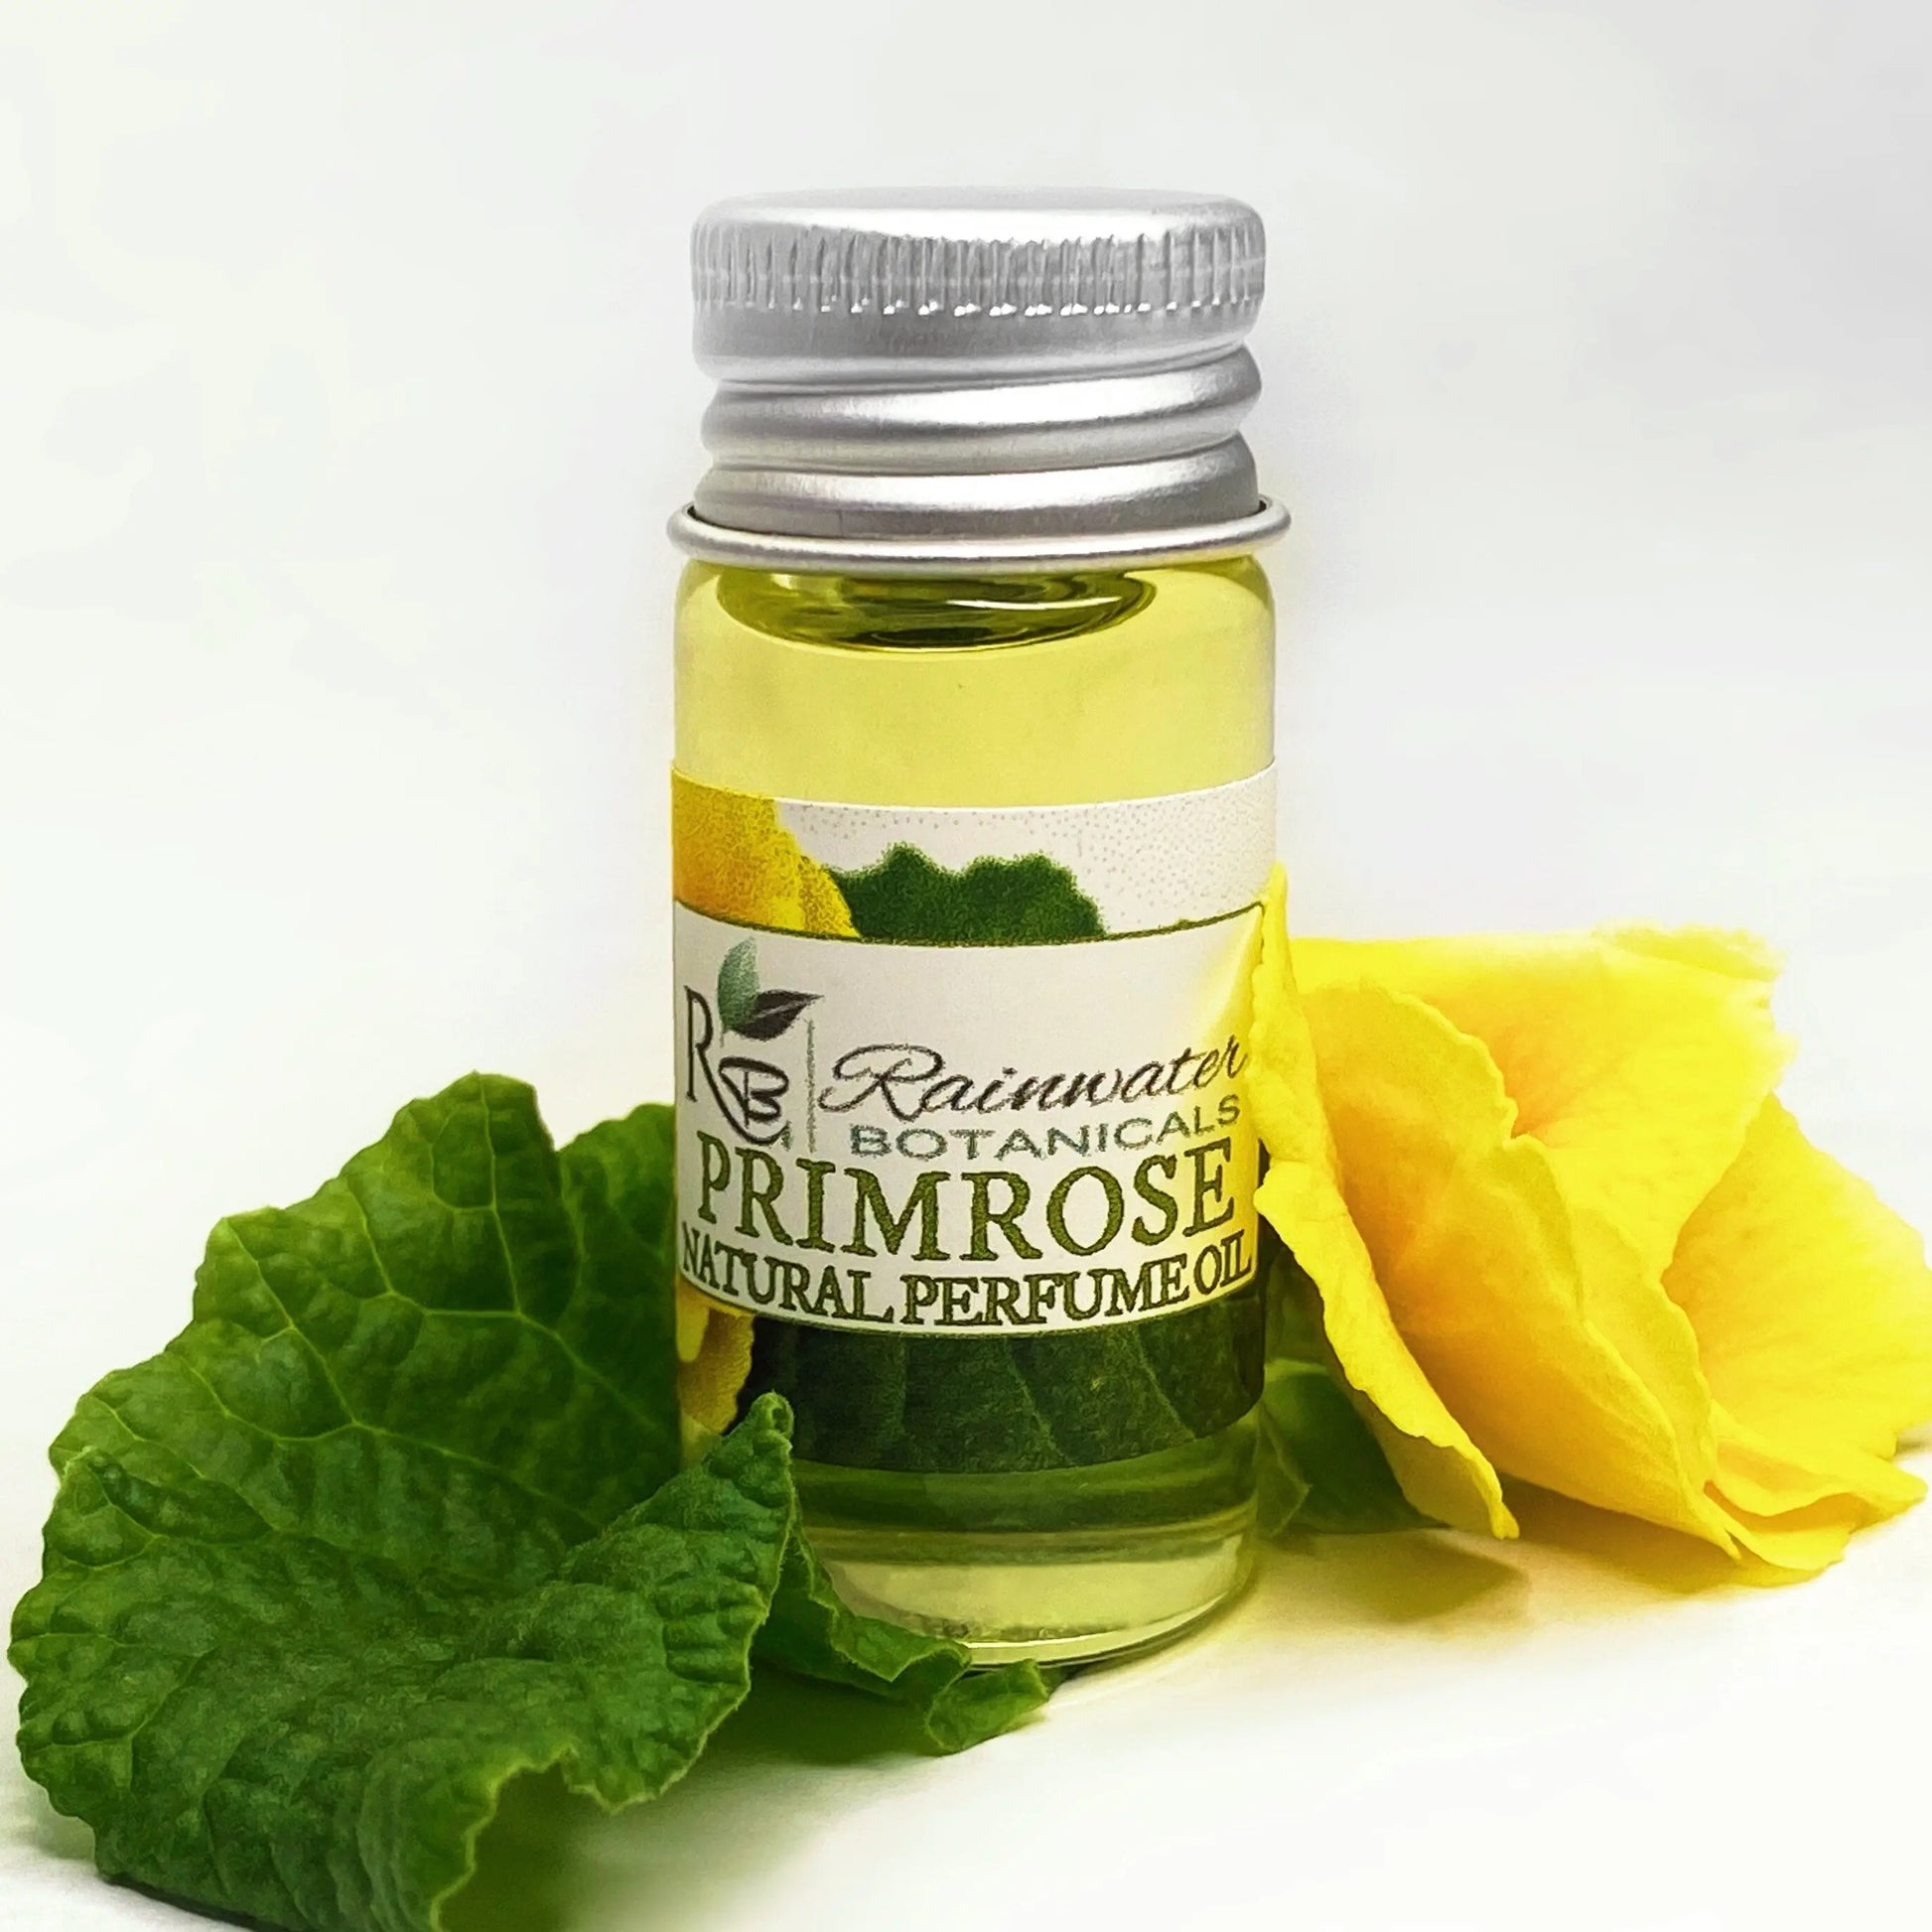 Primrose Perfume Oil - Rainwater Botanicals